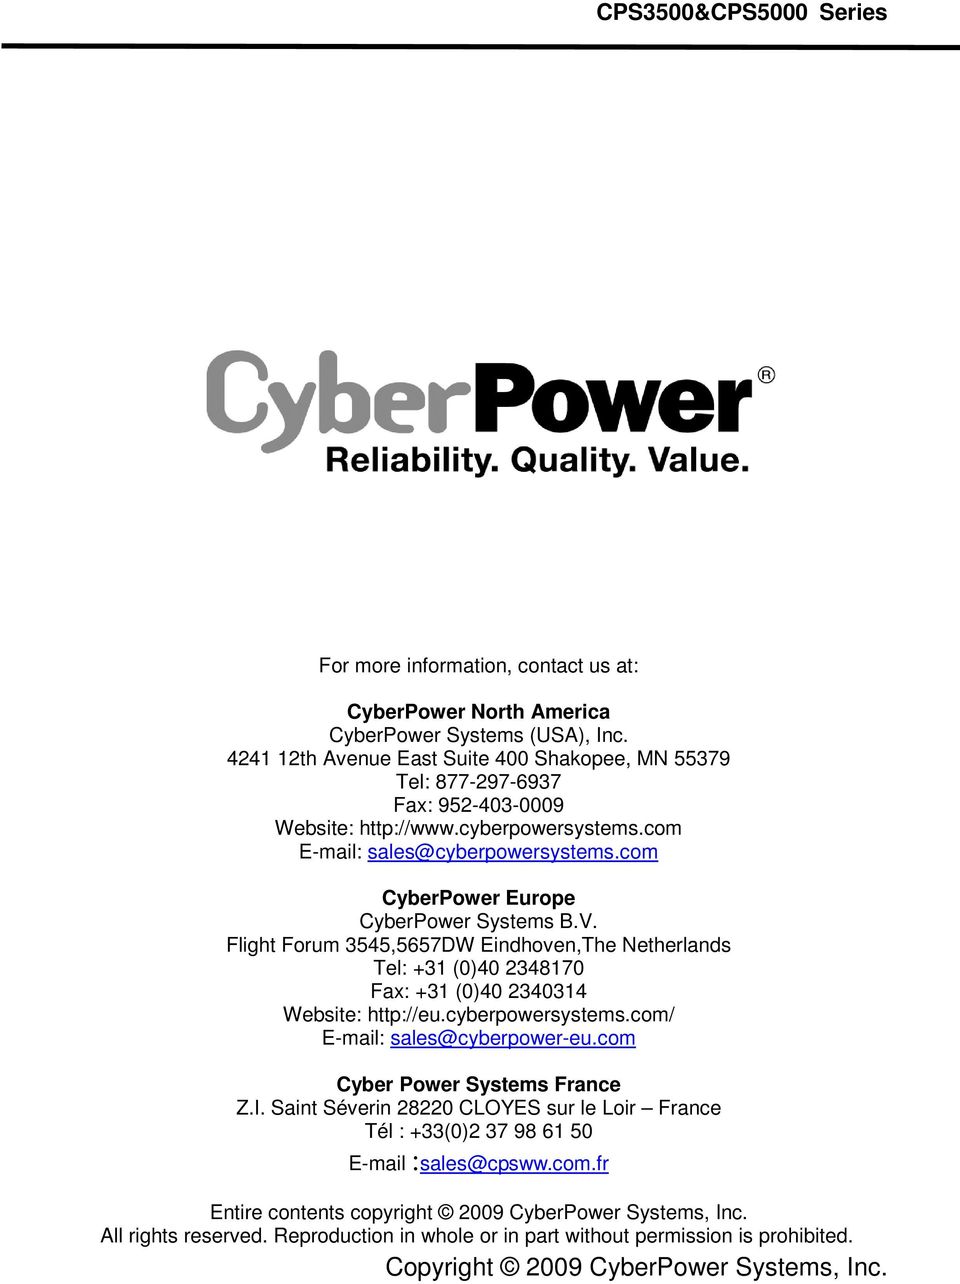 com CyberPower Europe CyberPower Systems B.V. Flight Forum 3545,5657DW Eindhoven,The Netherlands Tel: +31 (0)40 2348170 Fax: +31 (0)40 2340314 Website: http://eu.cyberpowersystems.